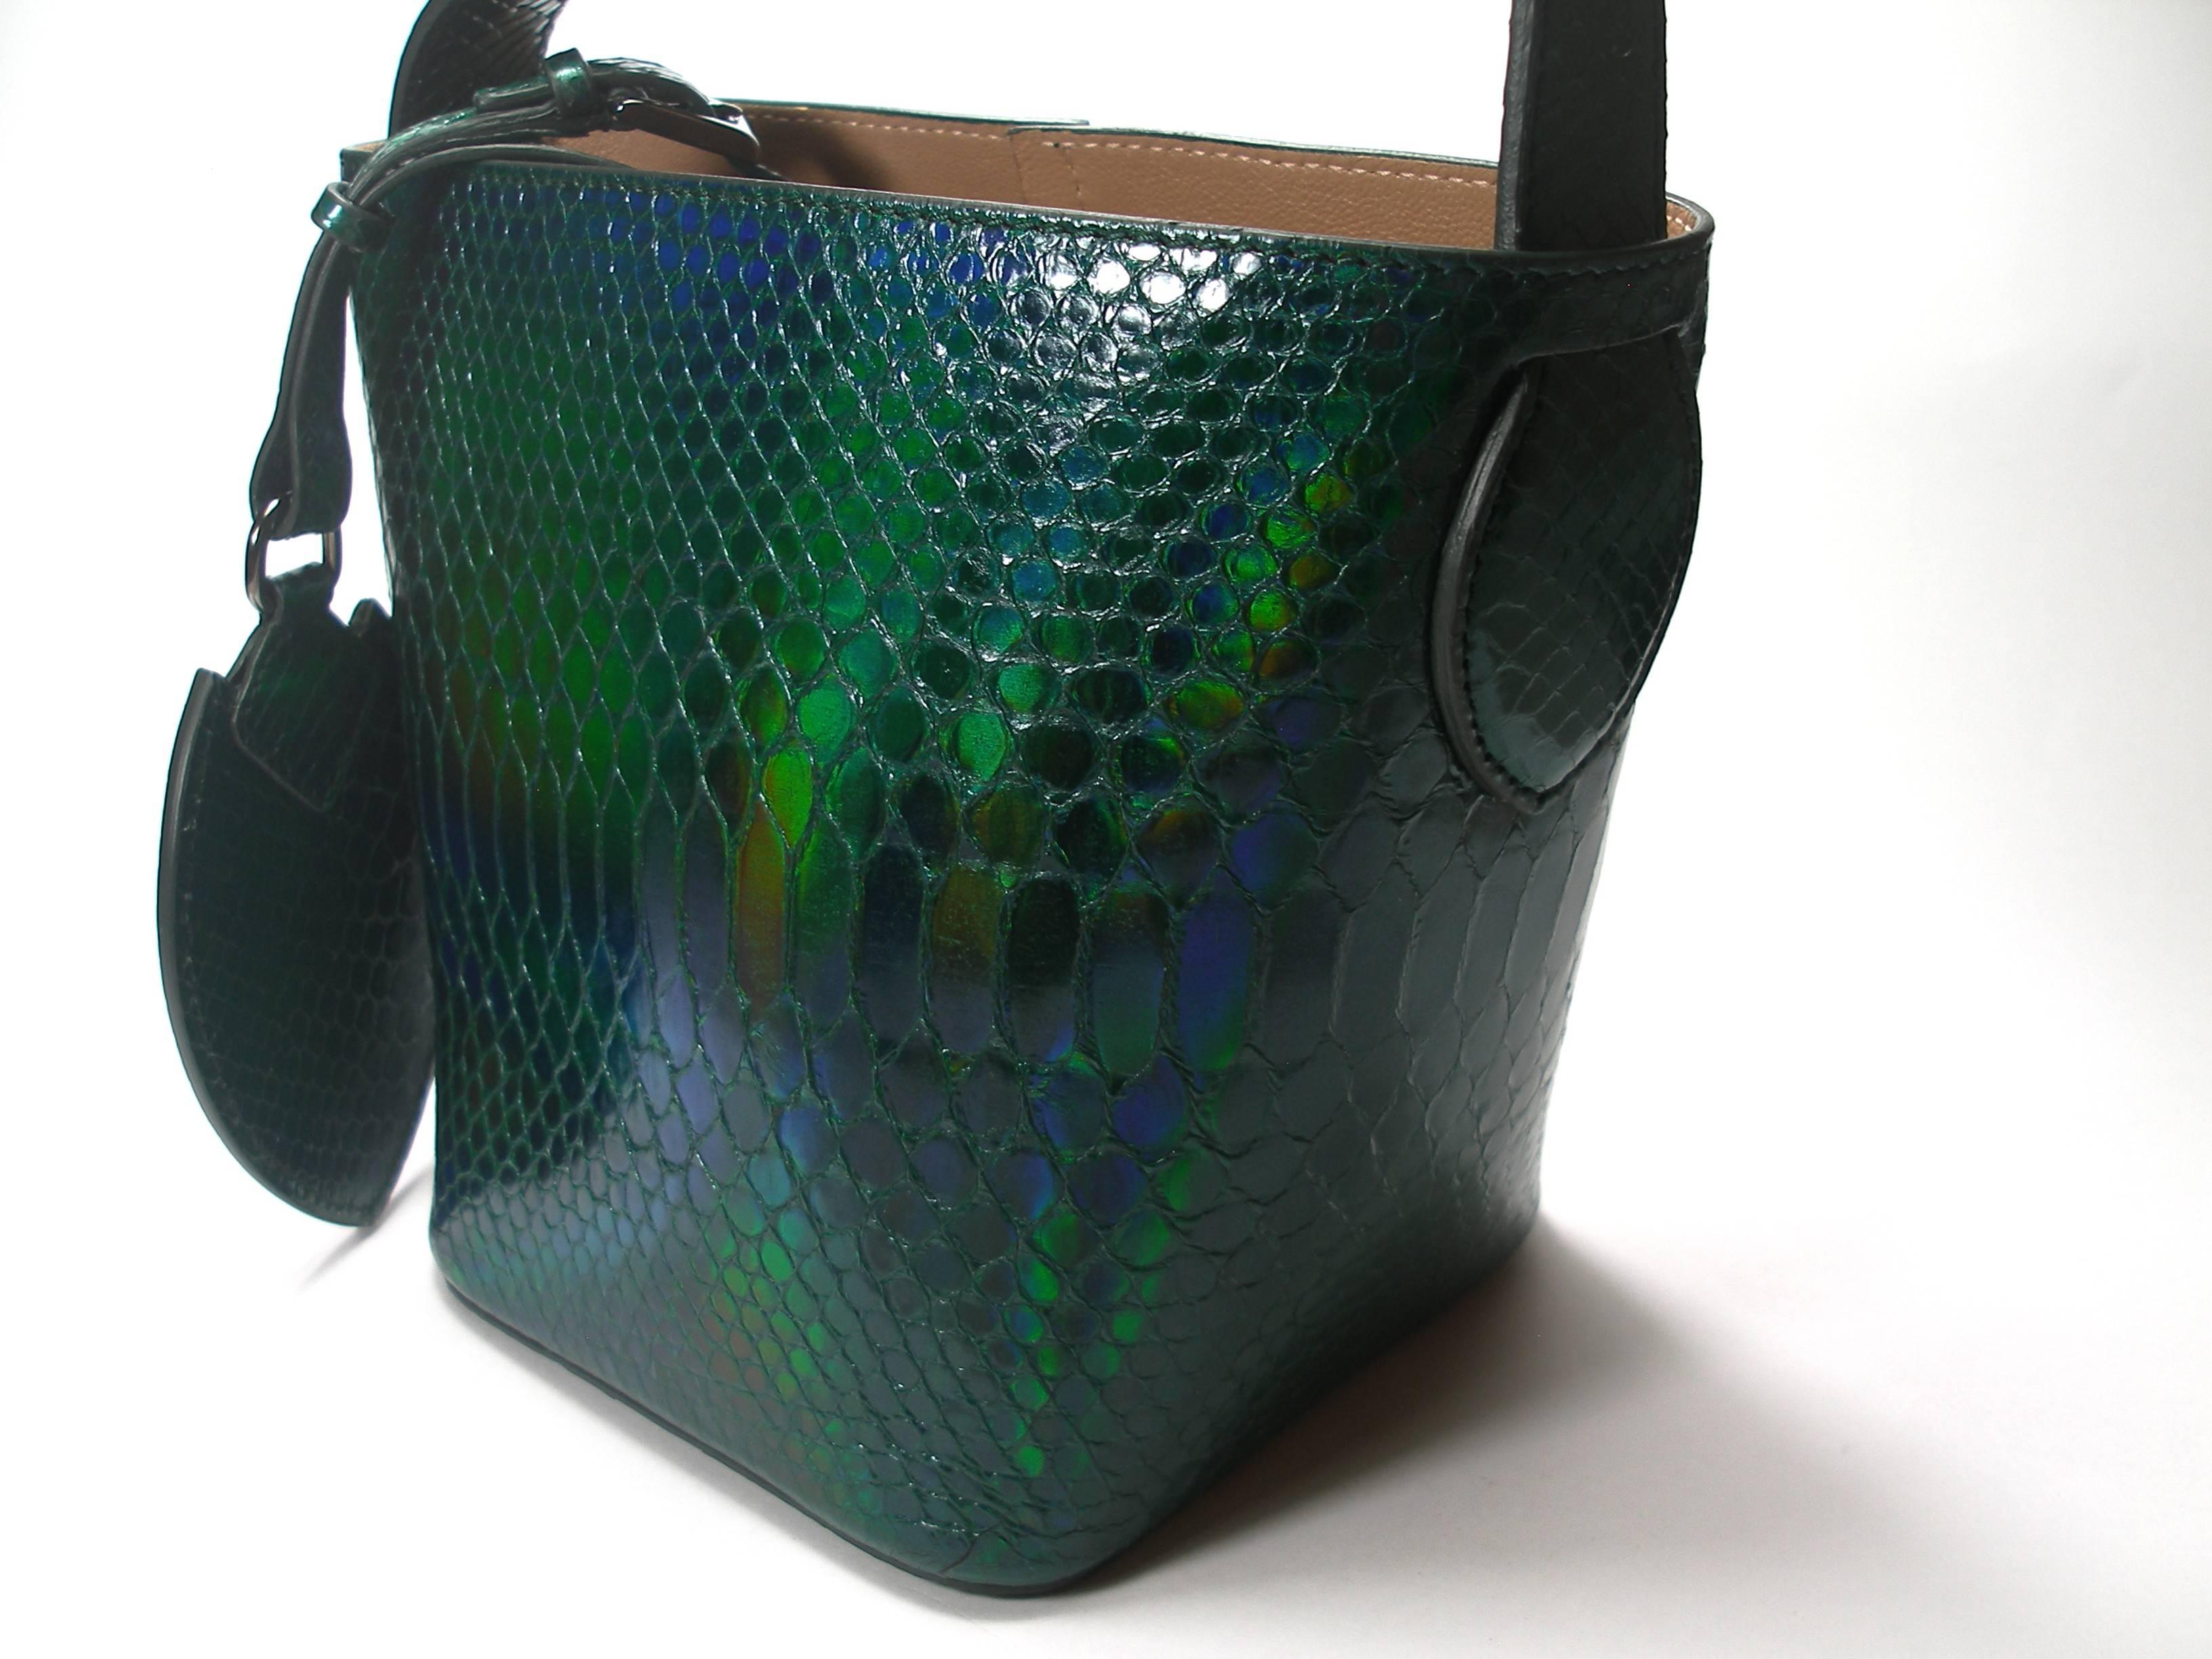 Rare ALAIA COUTURE BAG
Dim : 21 x 16 x 11 cm
Green mirrored python leather bucket handbag
No box / no dustbag
Retail price : 2280 usd 